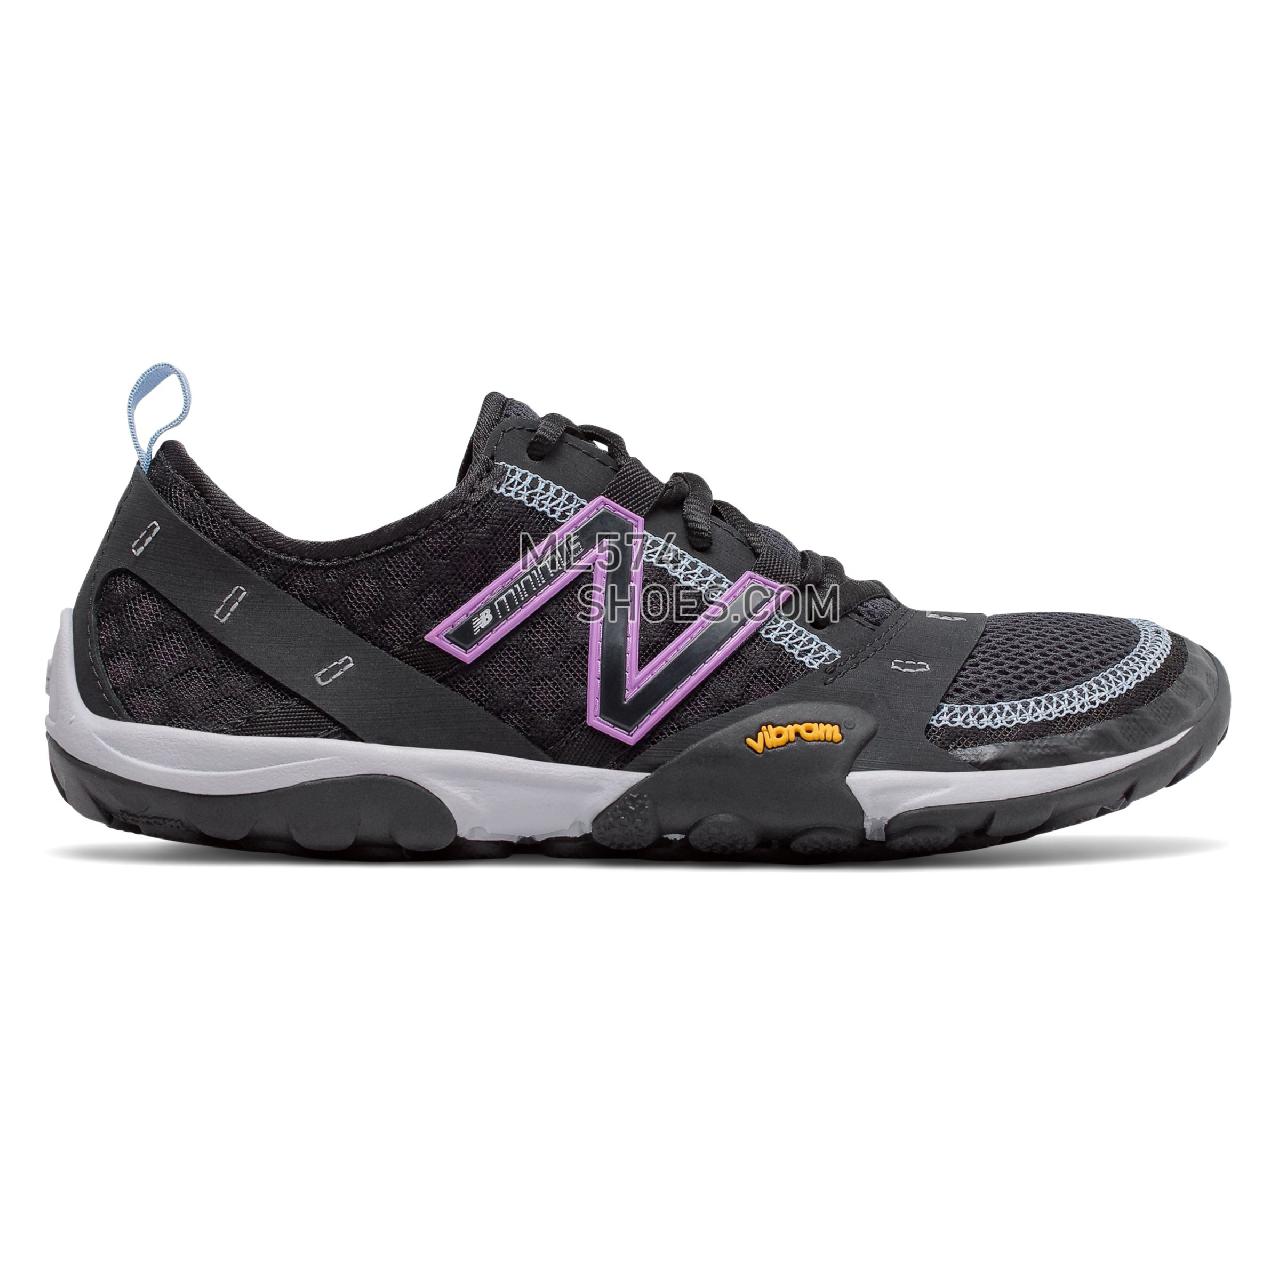 New Balance Minimus Trail 10v1 - Women's Trail Running - Black with Neo Violet - WT10BV